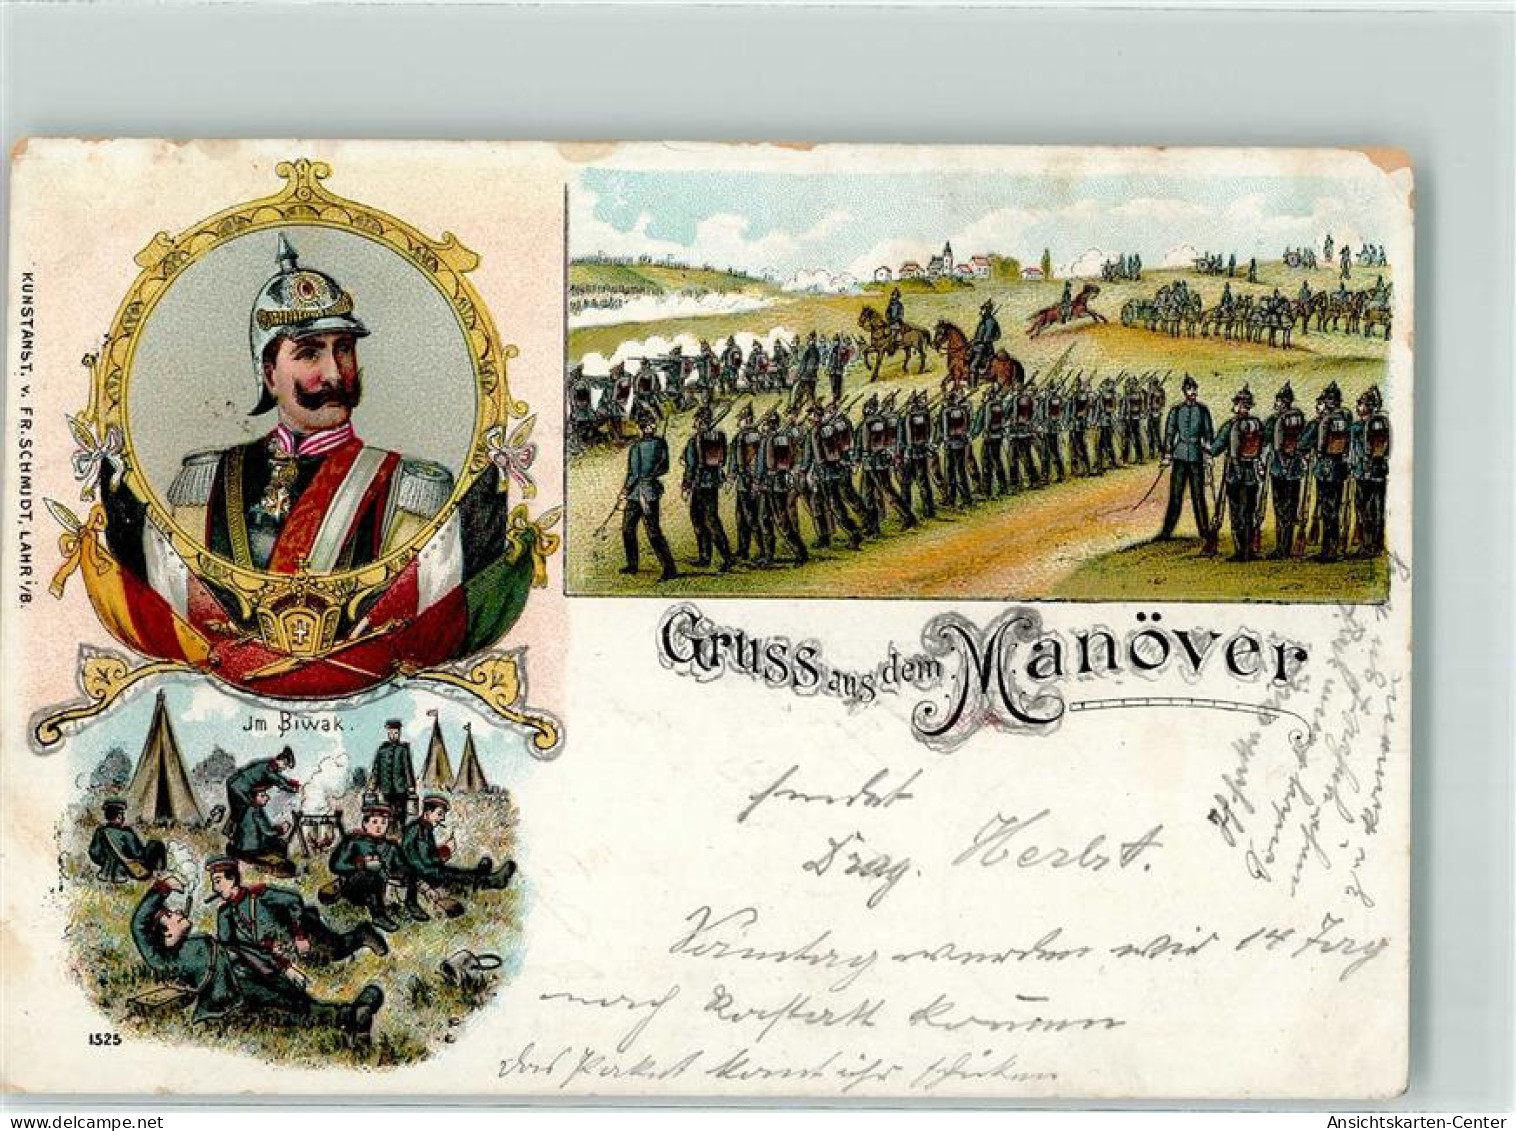 13285709 - Portrait Kaiser Wilhelm II Im Biwak Uniform Verlag Fr. Schmidt 1525 - Manöver